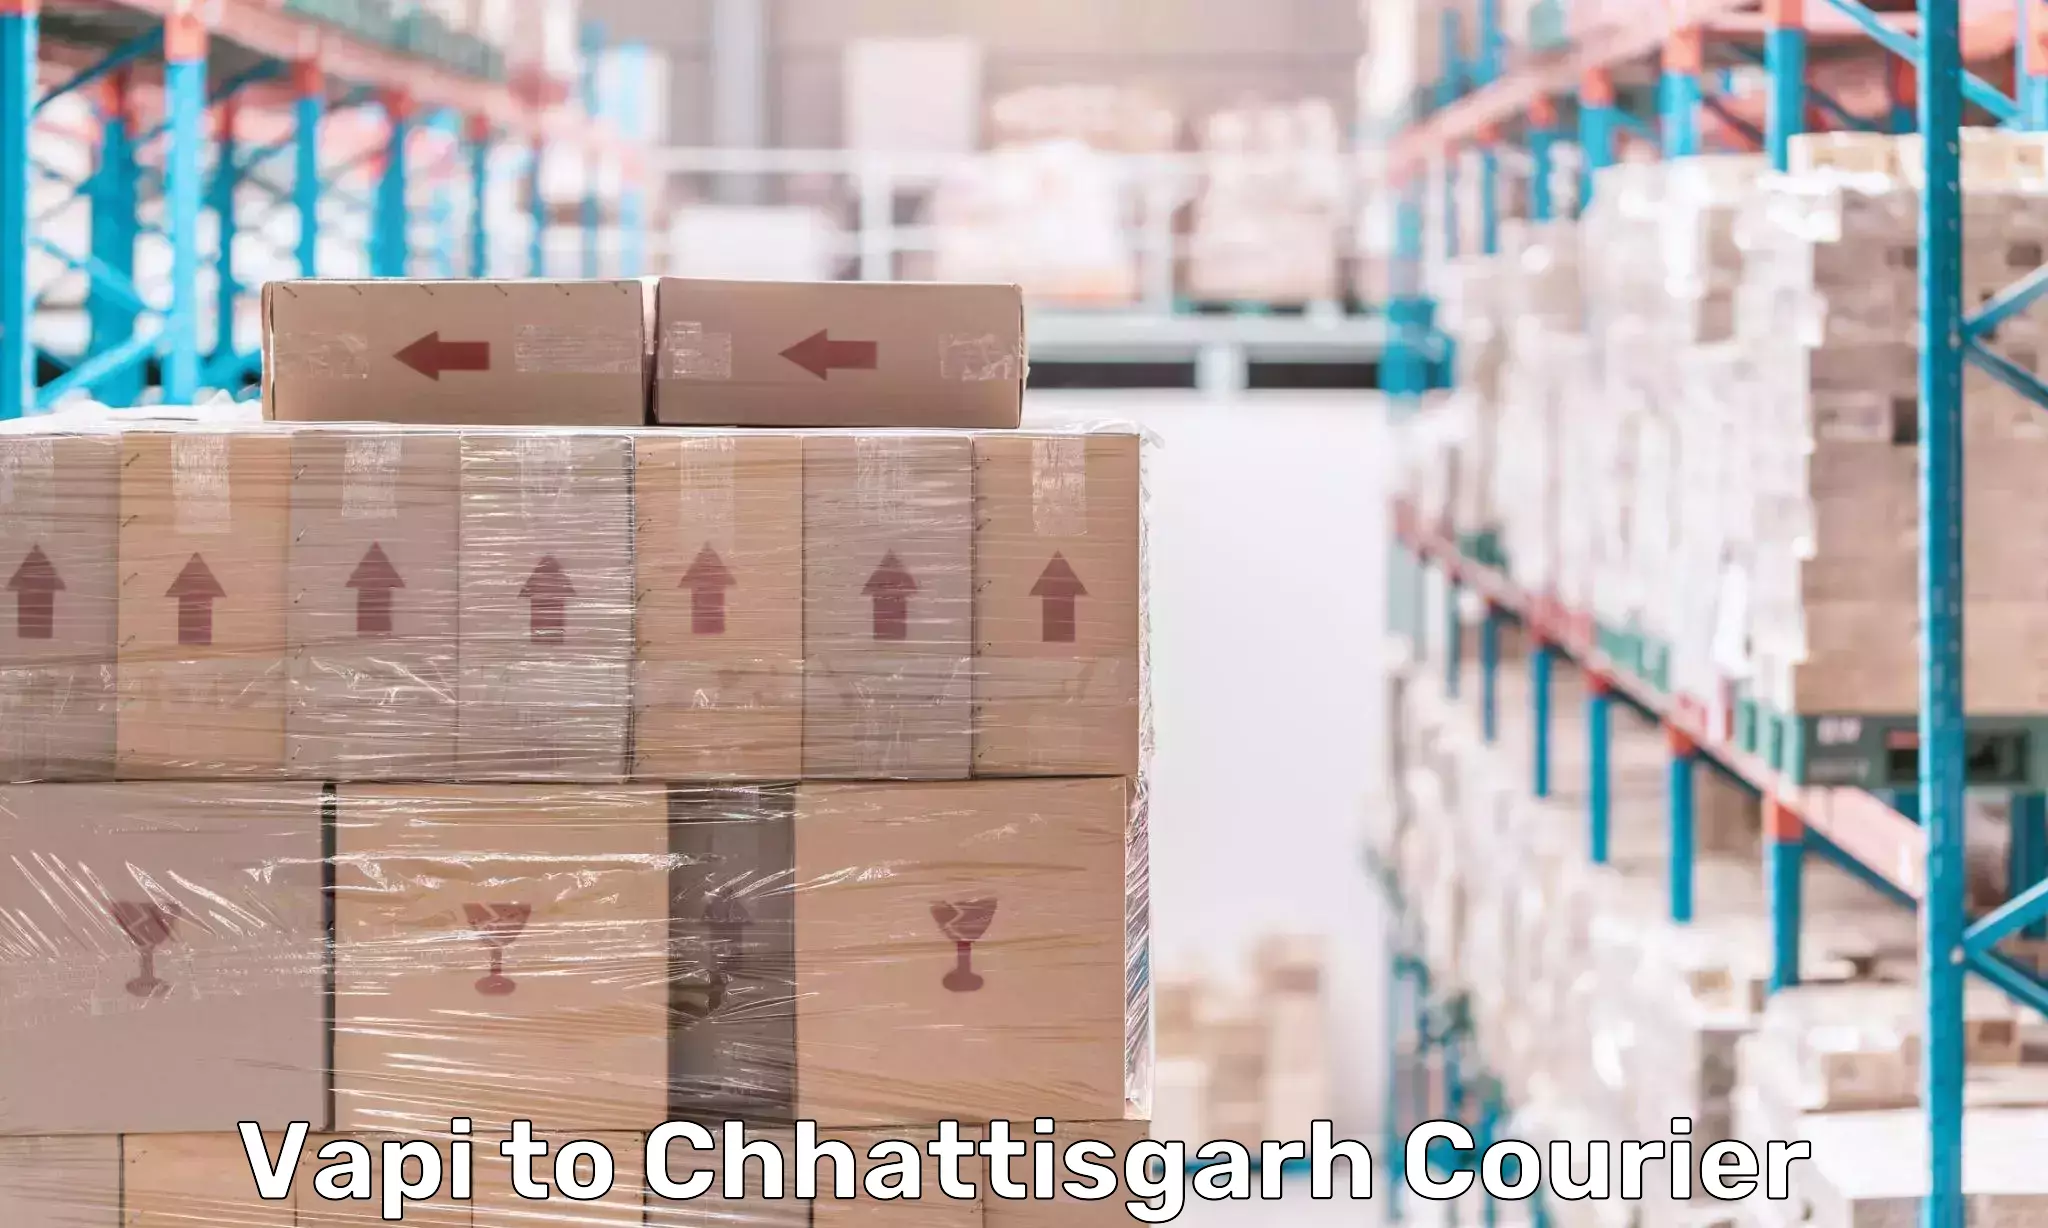 International parcel service Vapi to Chhattisgarh